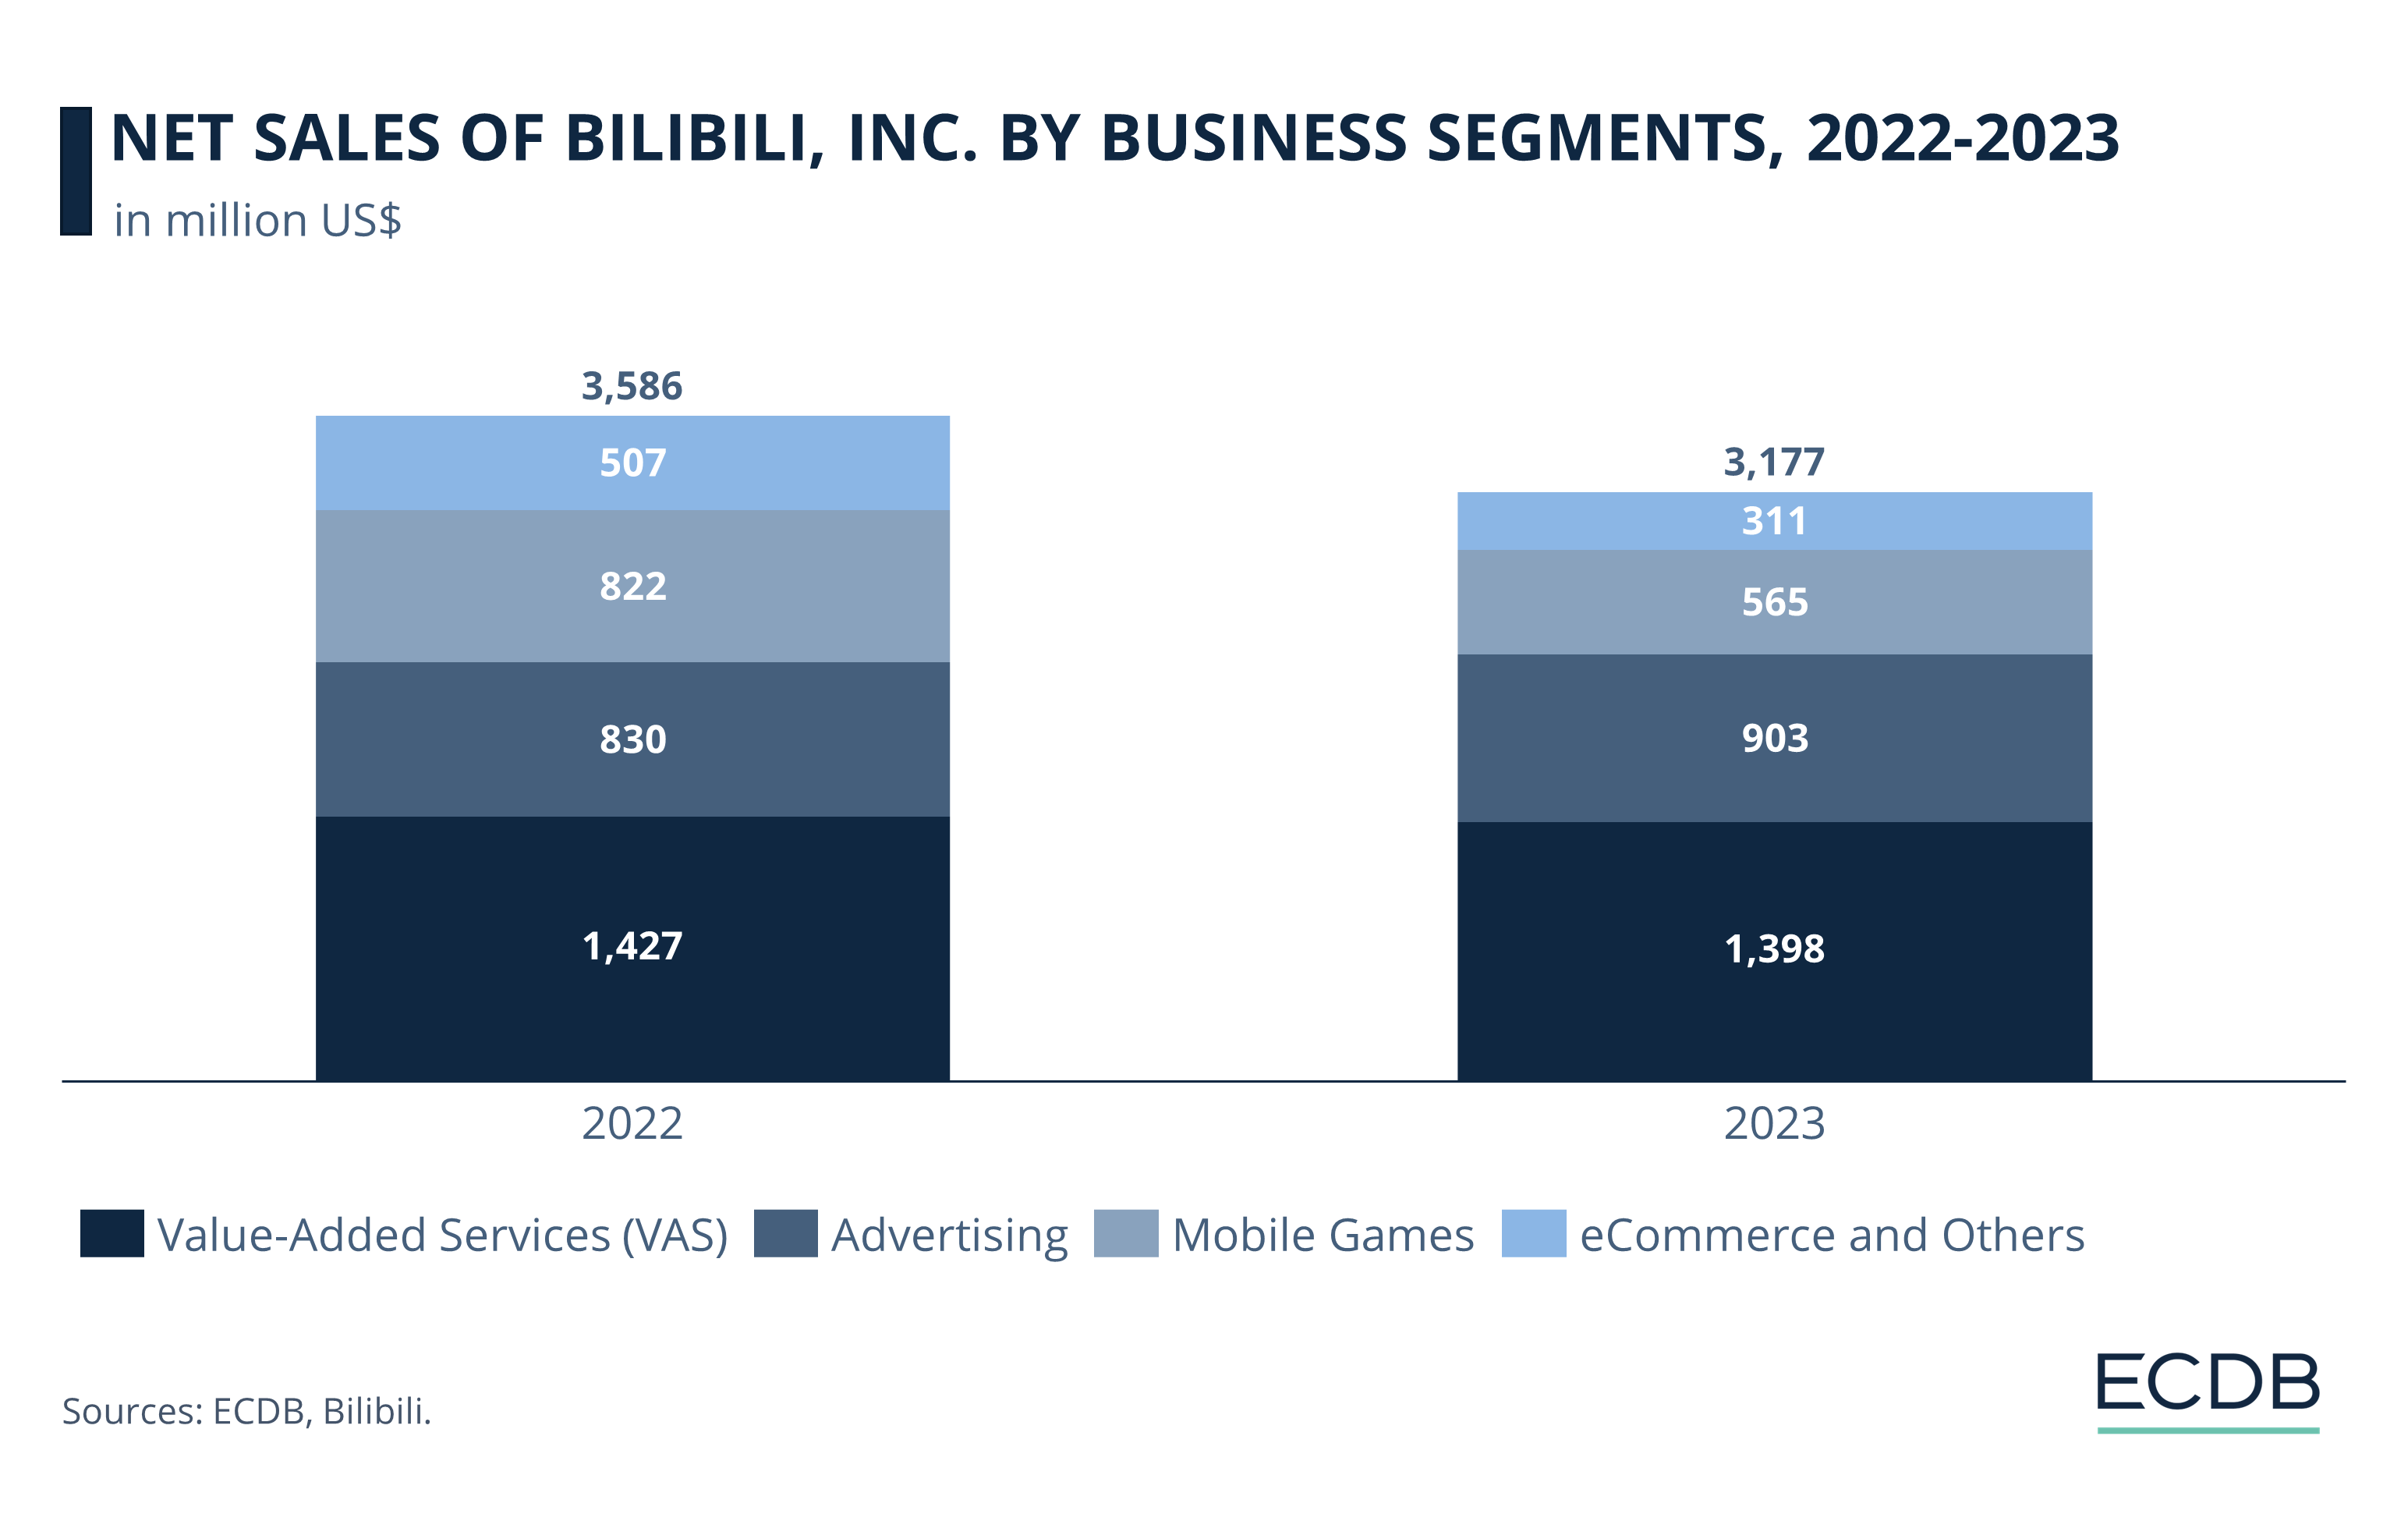 Net Sales of Bilibili, Inc. by Business Segments, 2022-2023